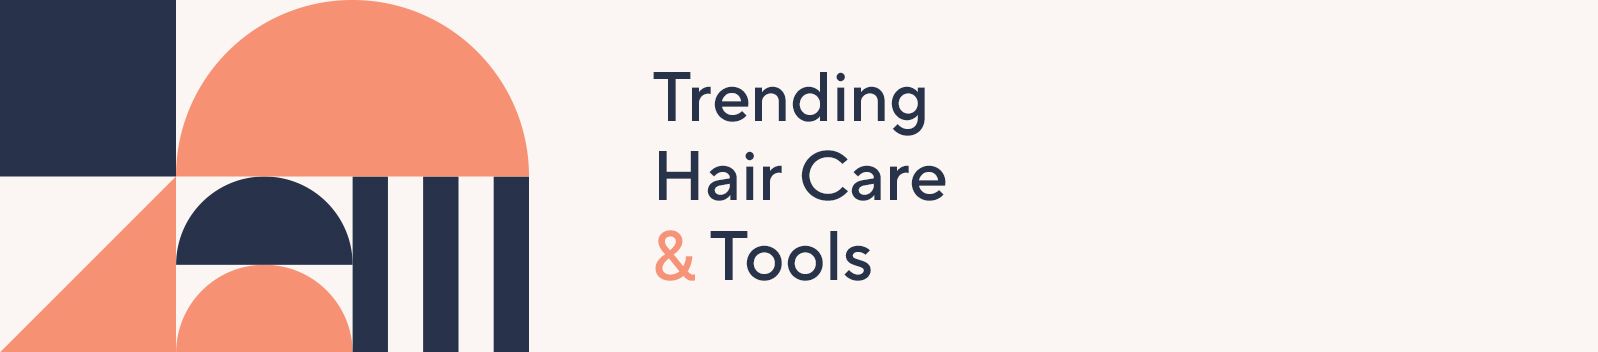 Trending Hair Care & Tools